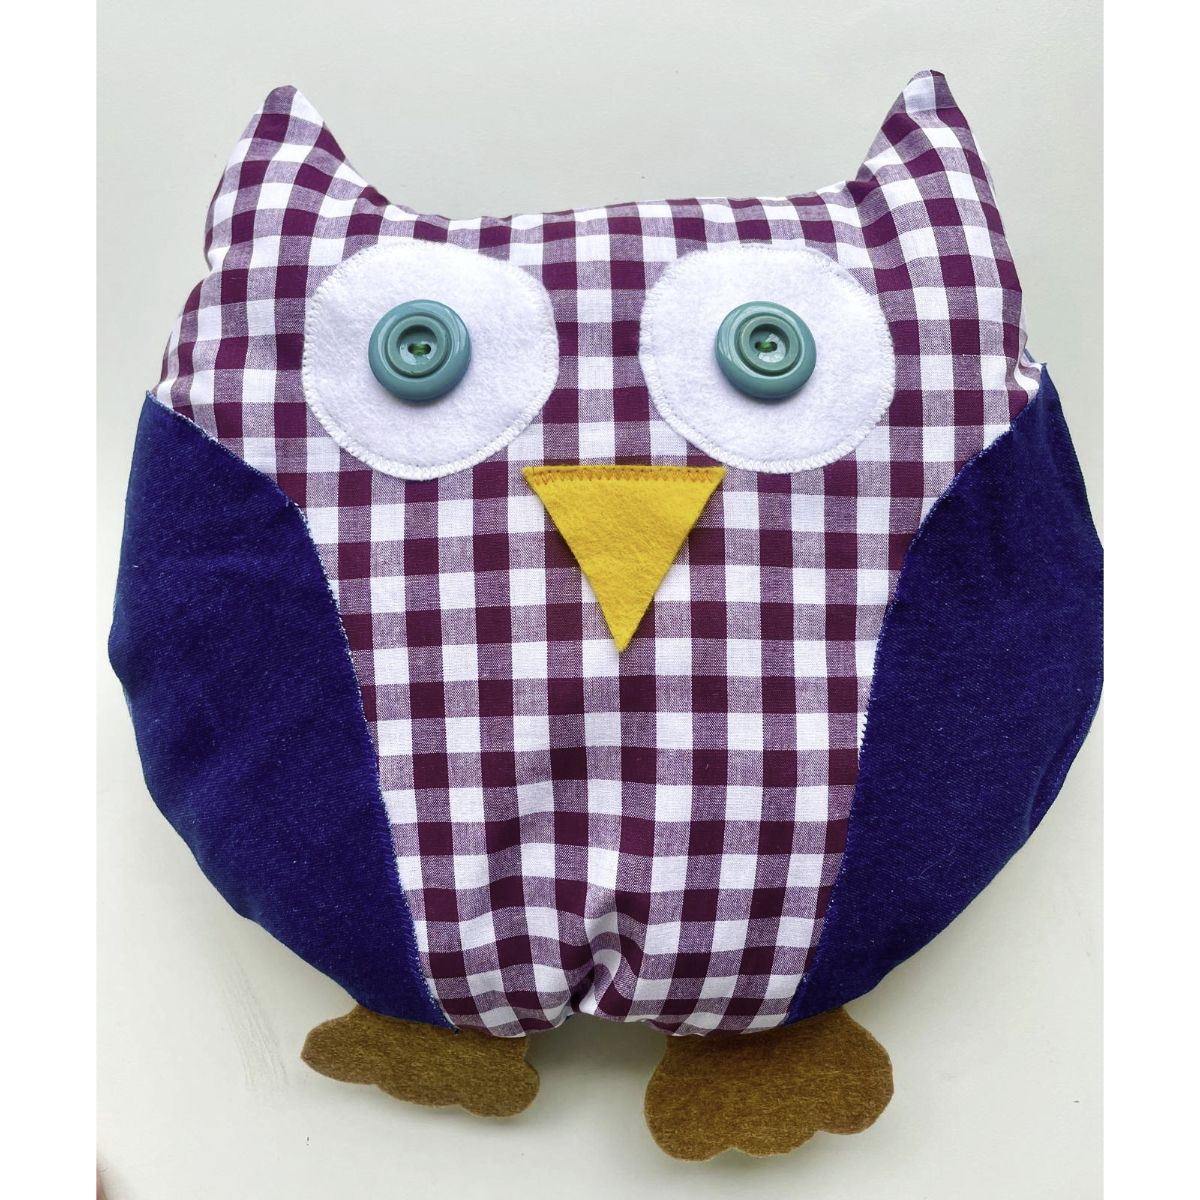 Kids Summer Sewing Workshop - Owl cushions!